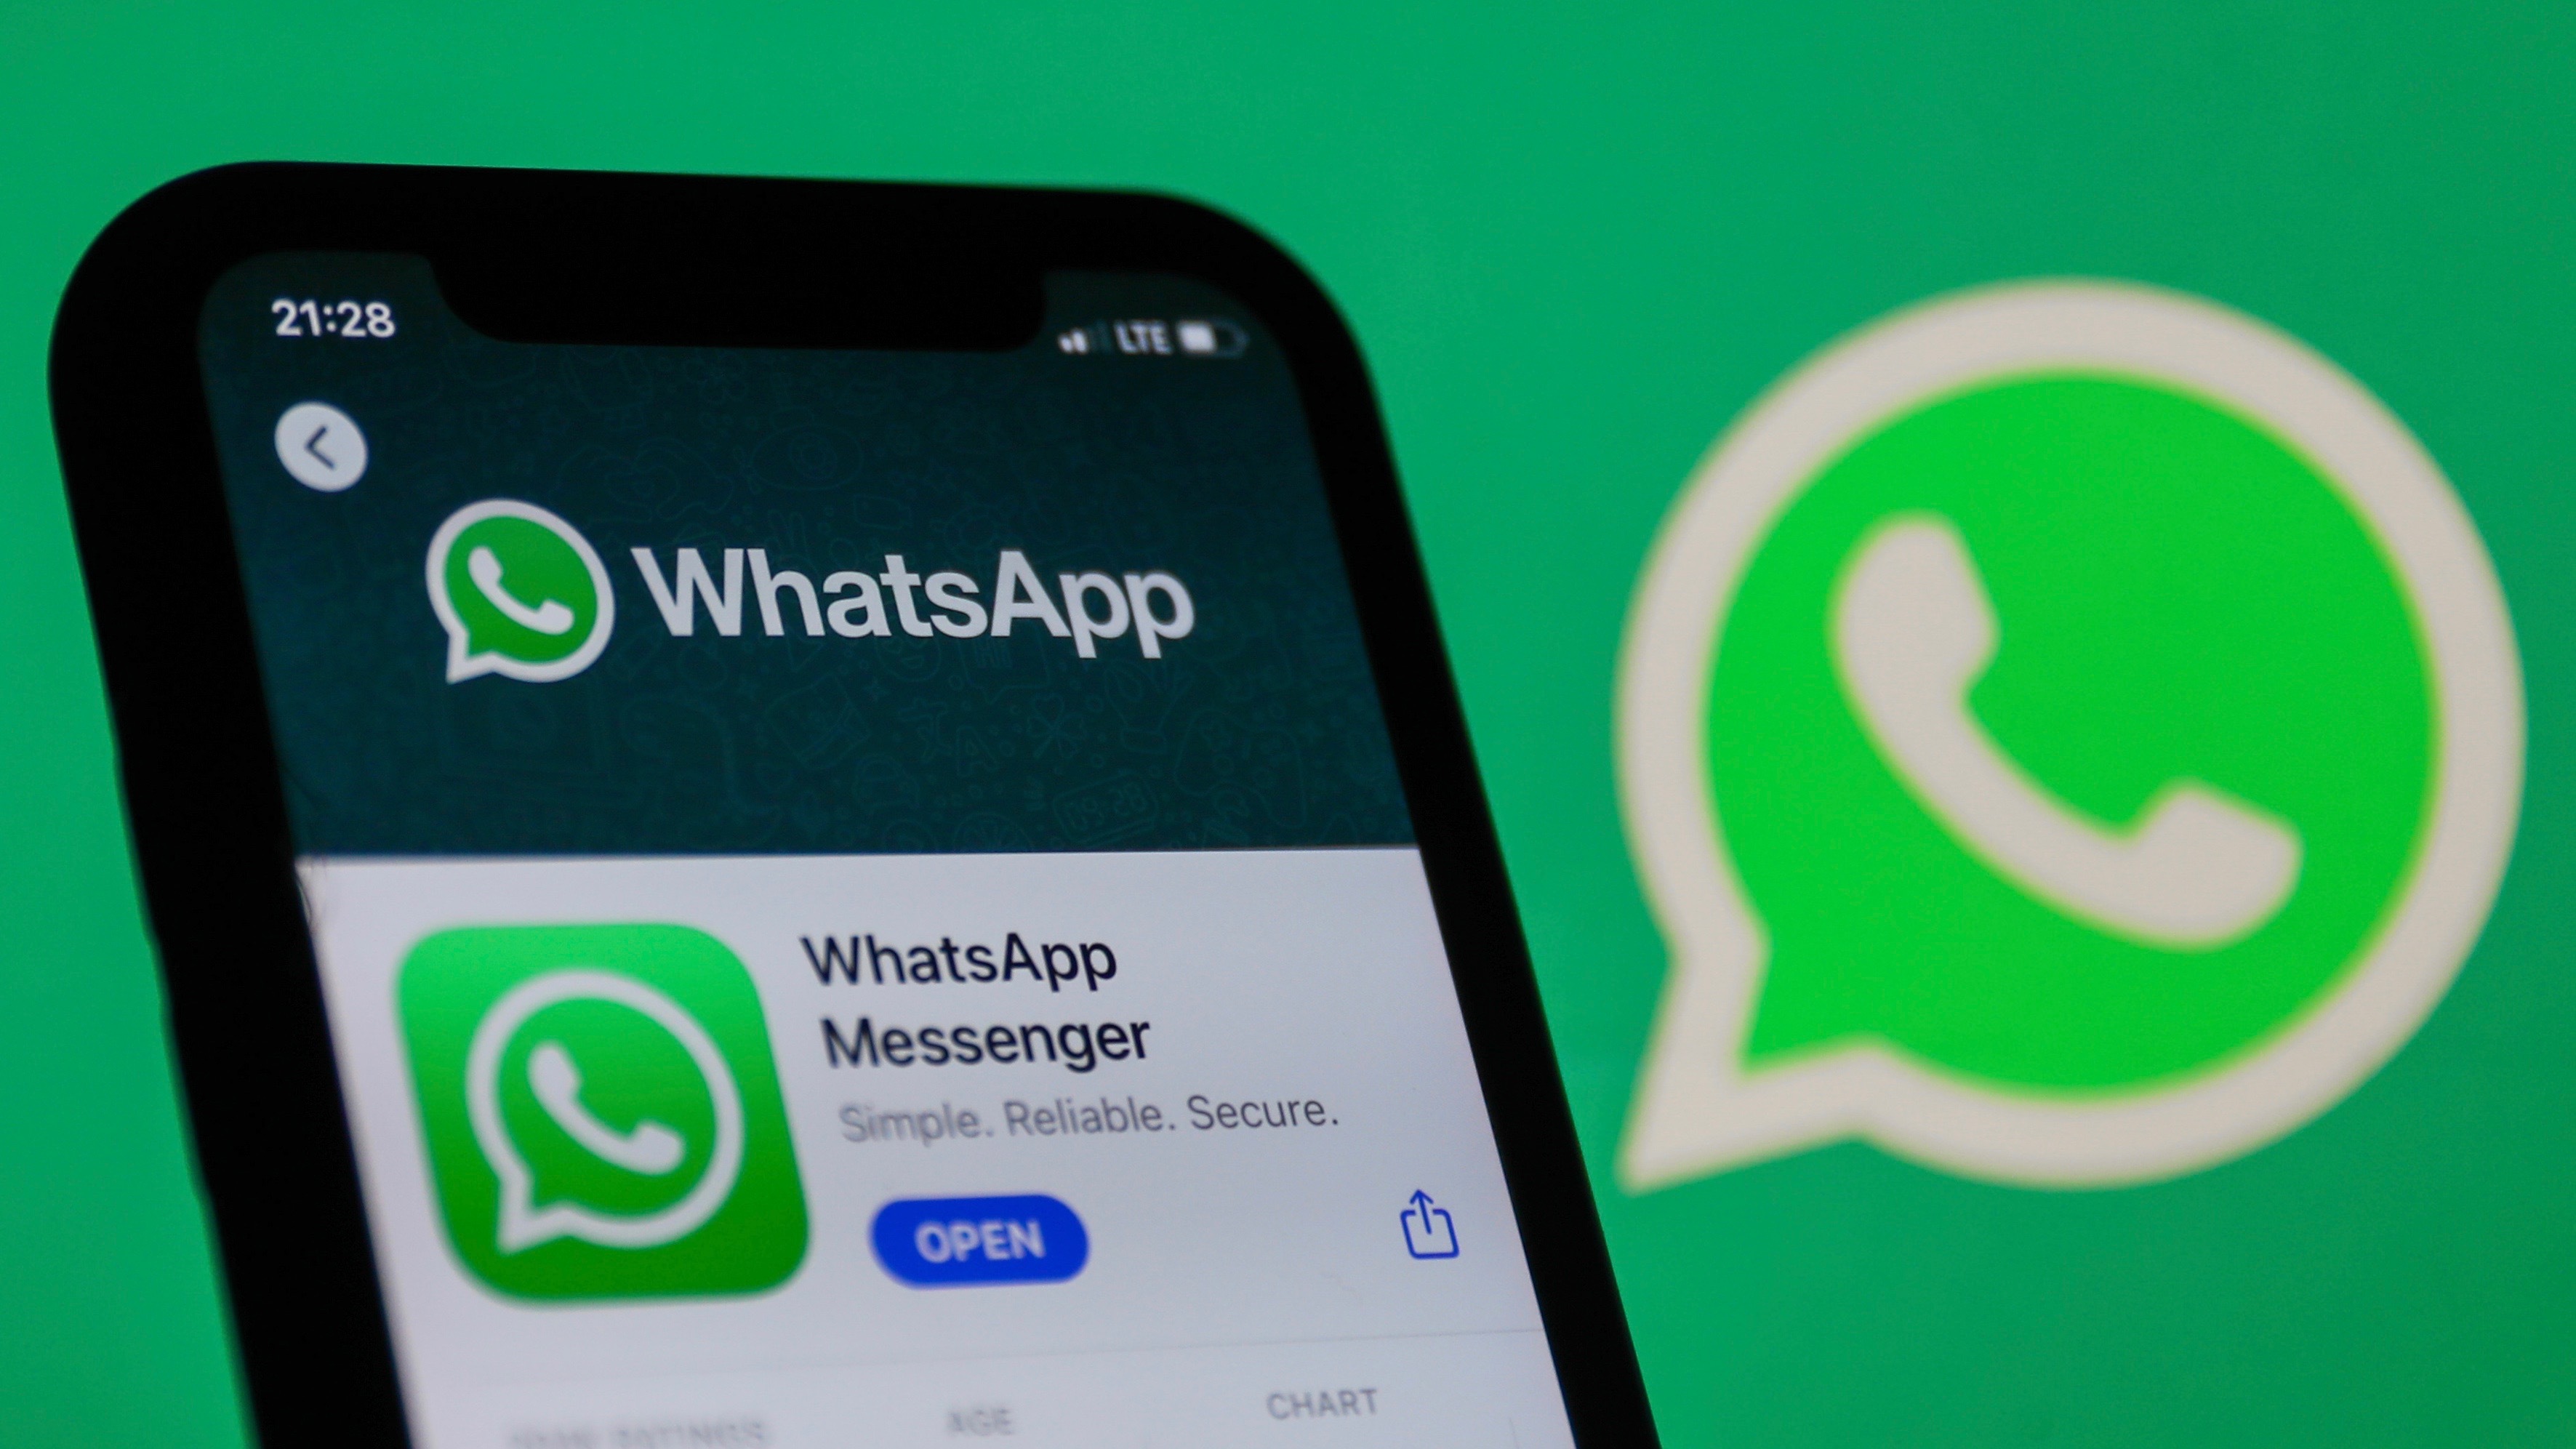 Nga Iphone tek Samsung, WhatsApp do ndaloje se funksionuari ne keto telefona te henen